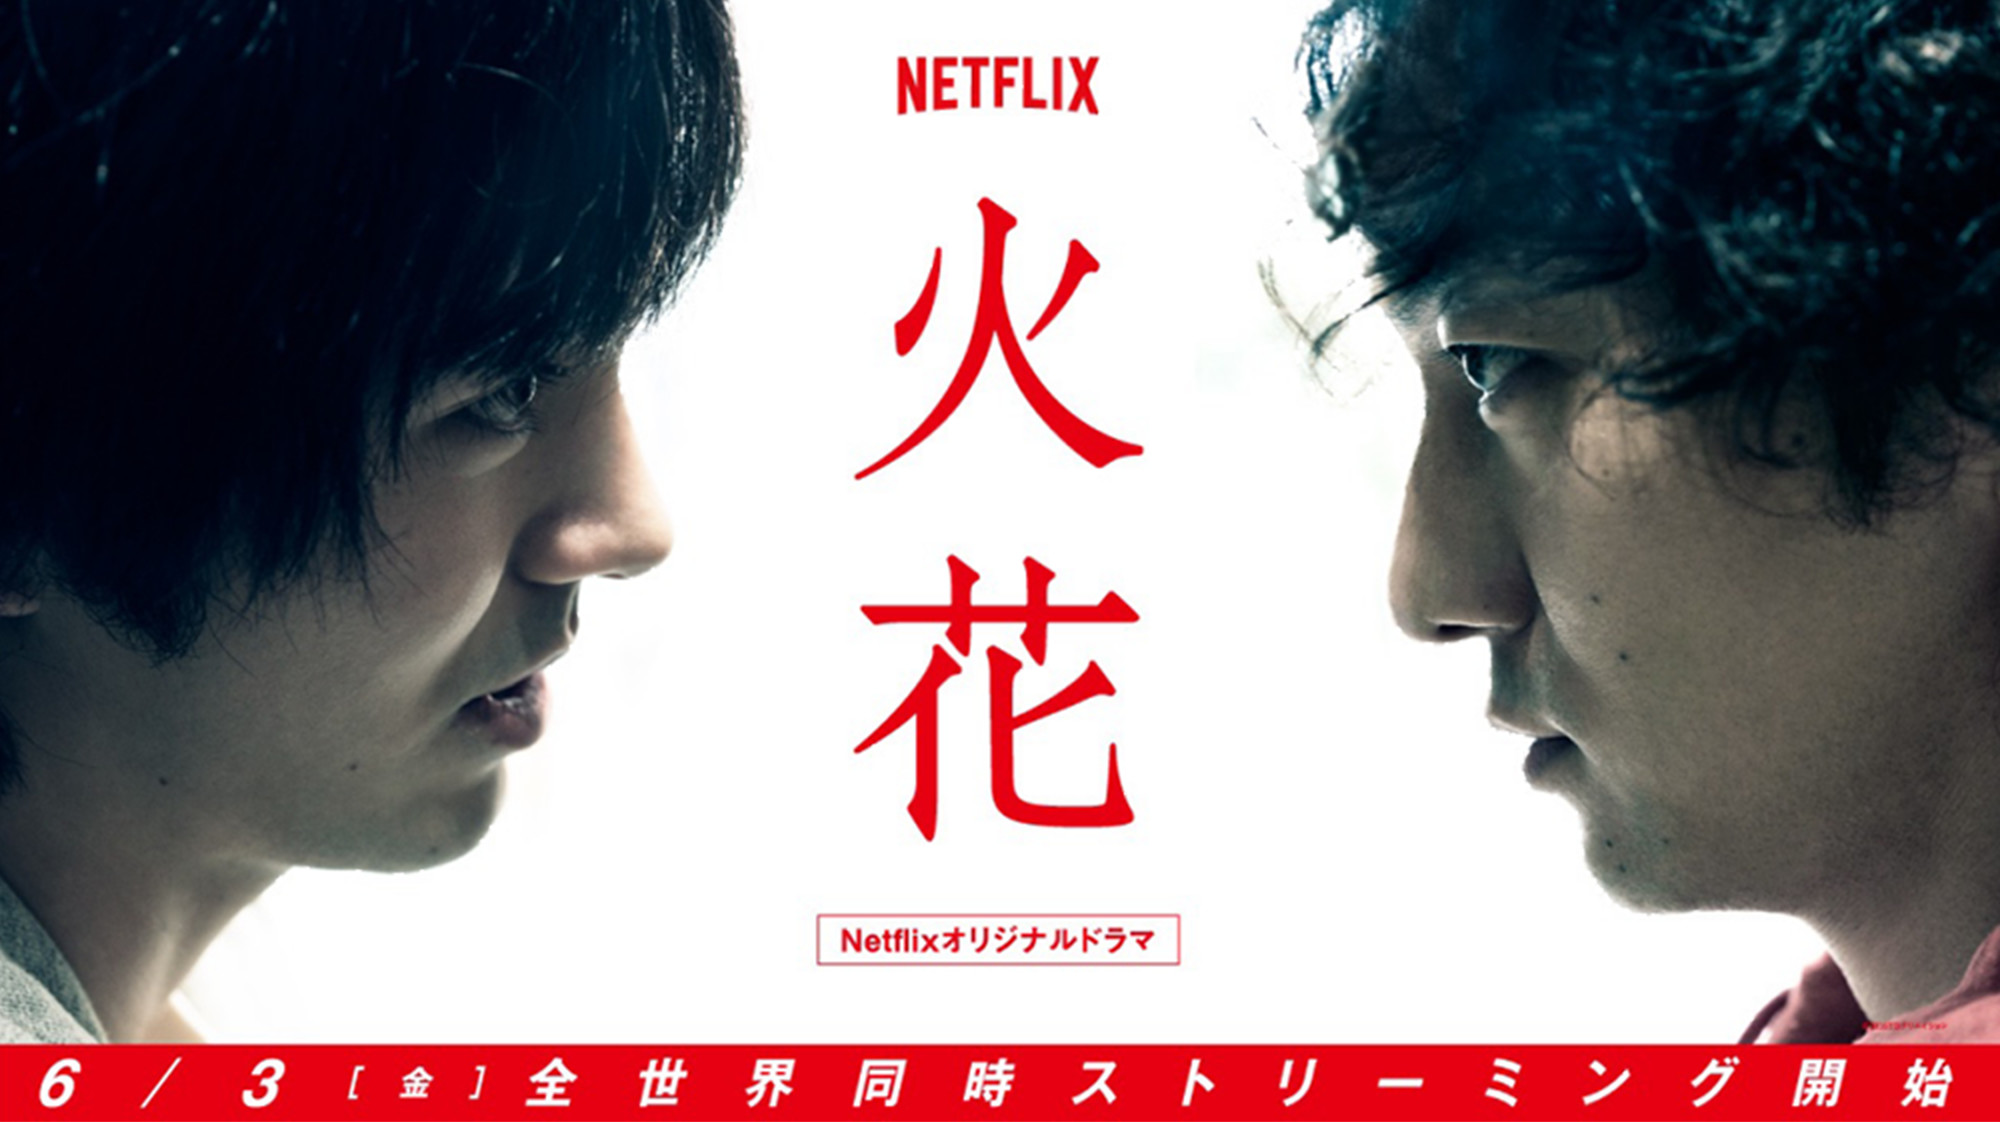 Netflix オリジナルドラマ『火花』美術協力